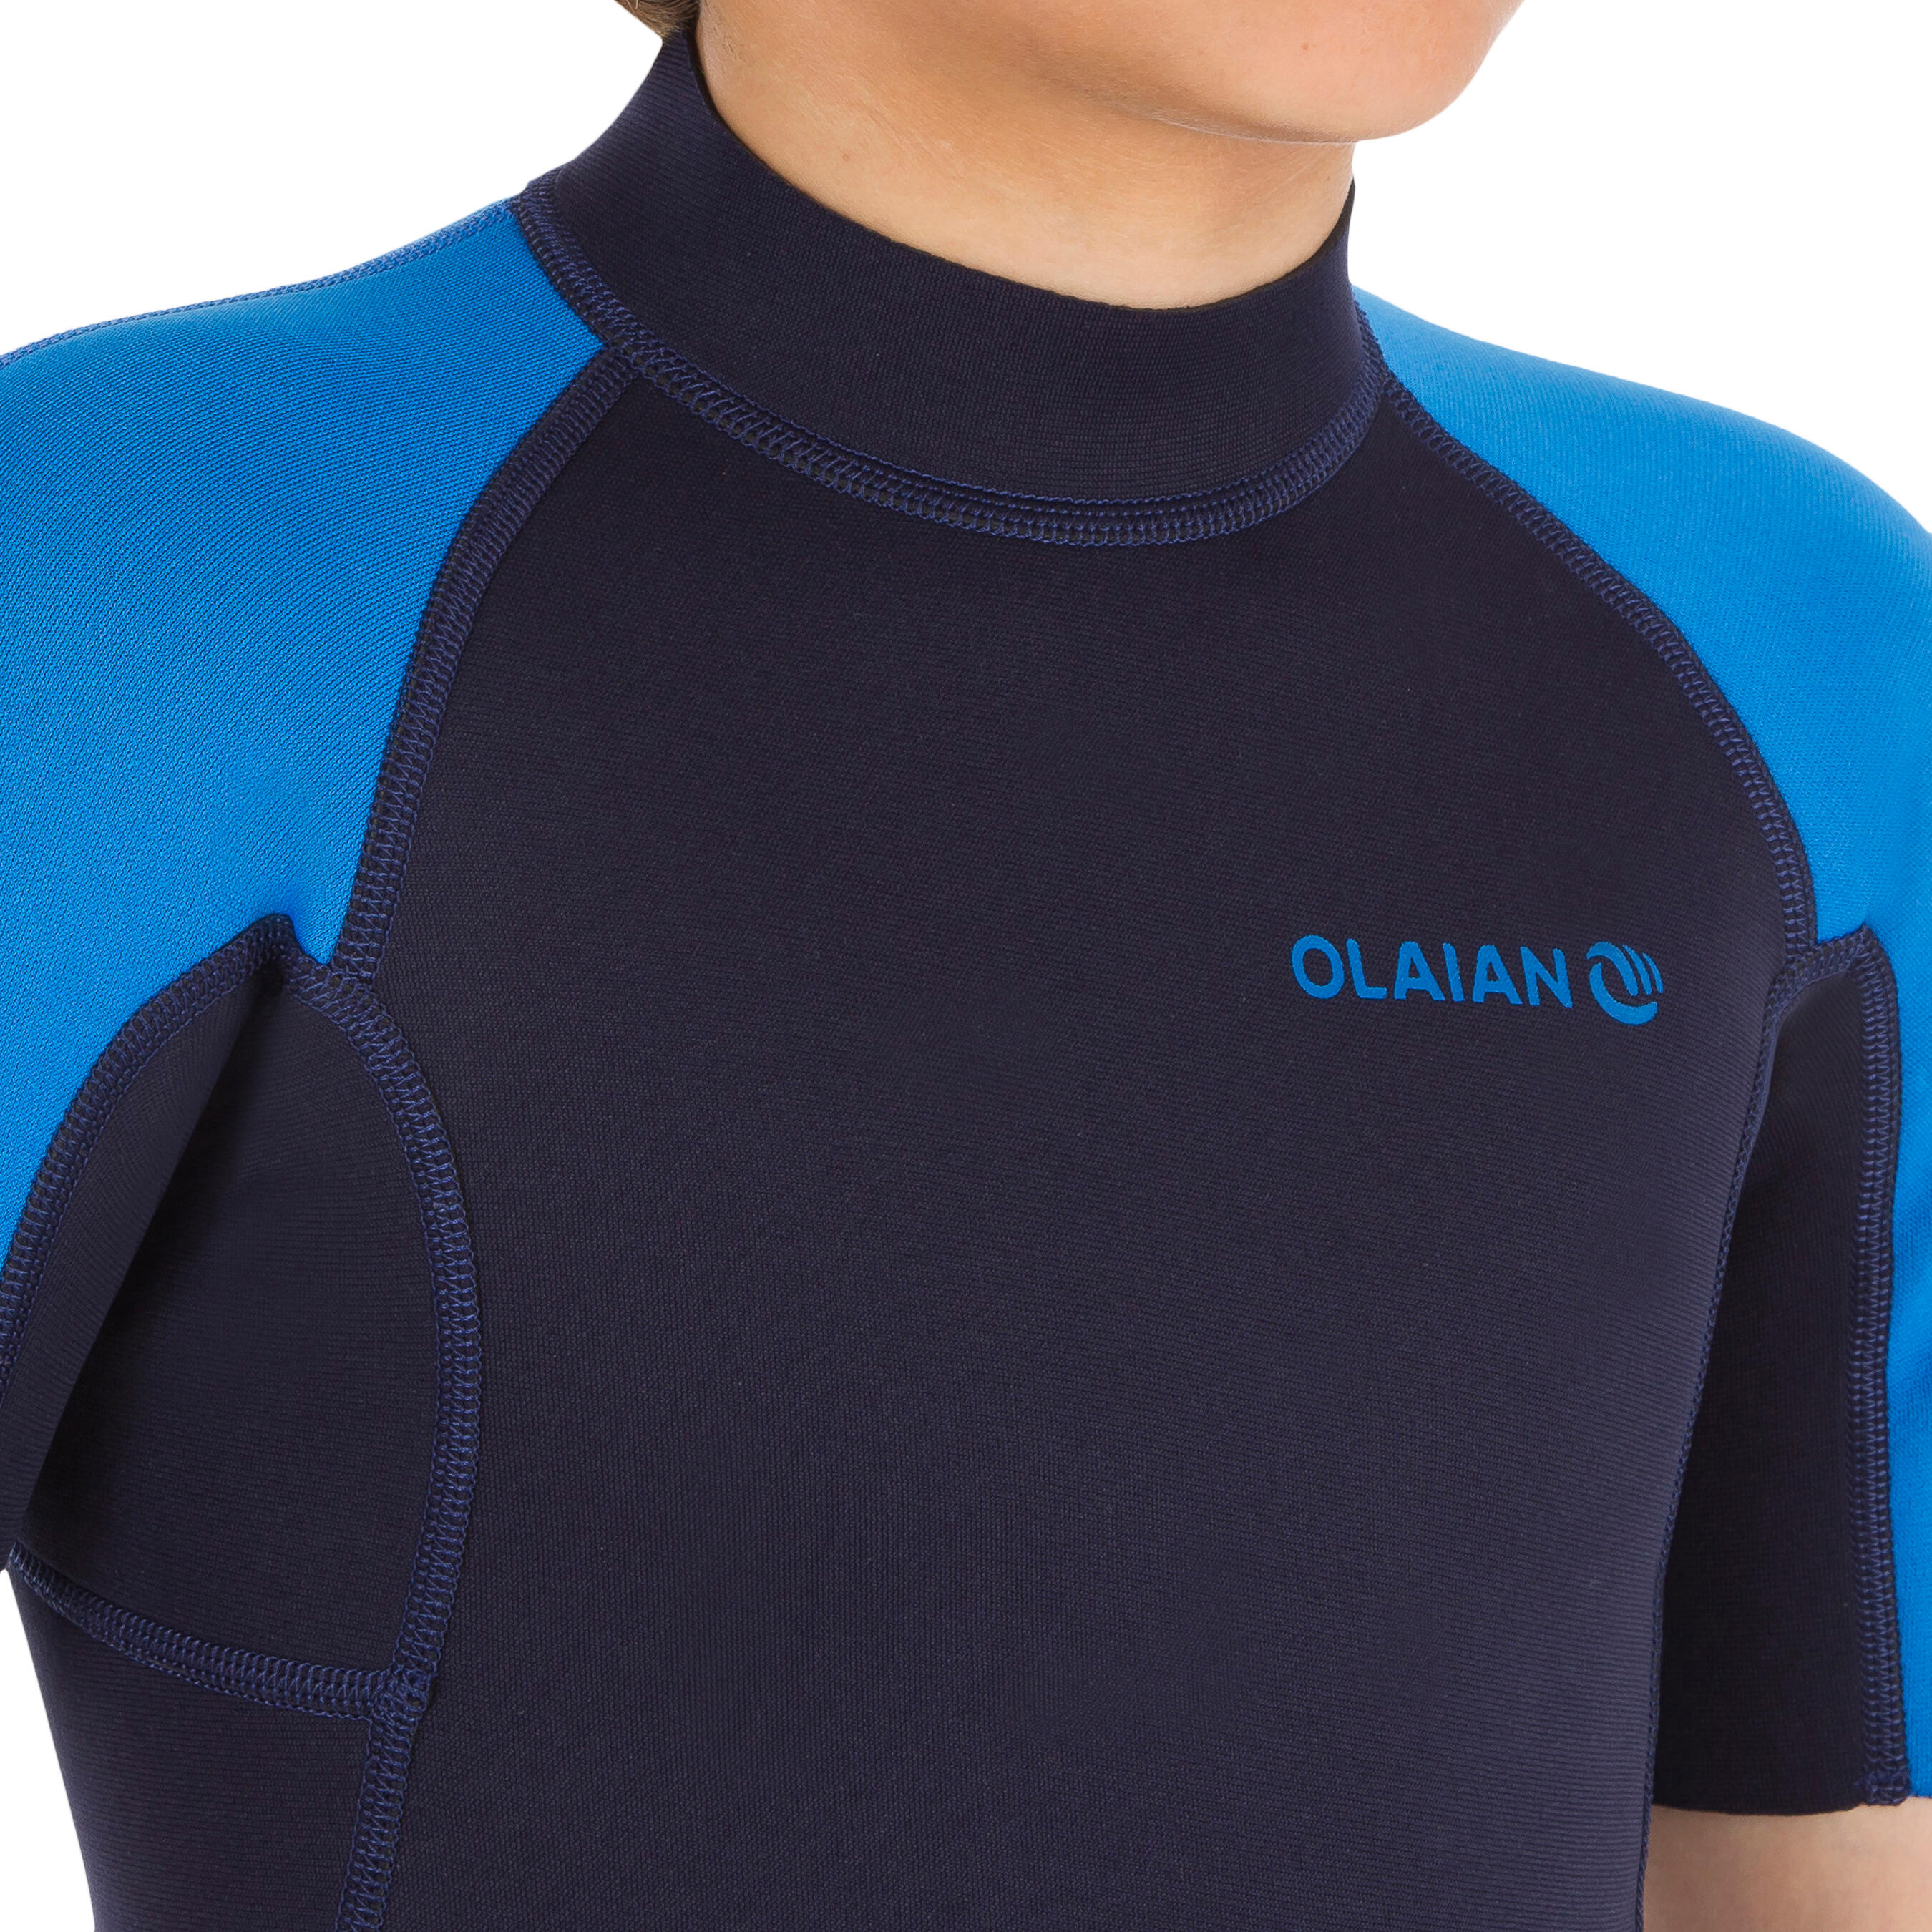 decathlon shorty wetsuit